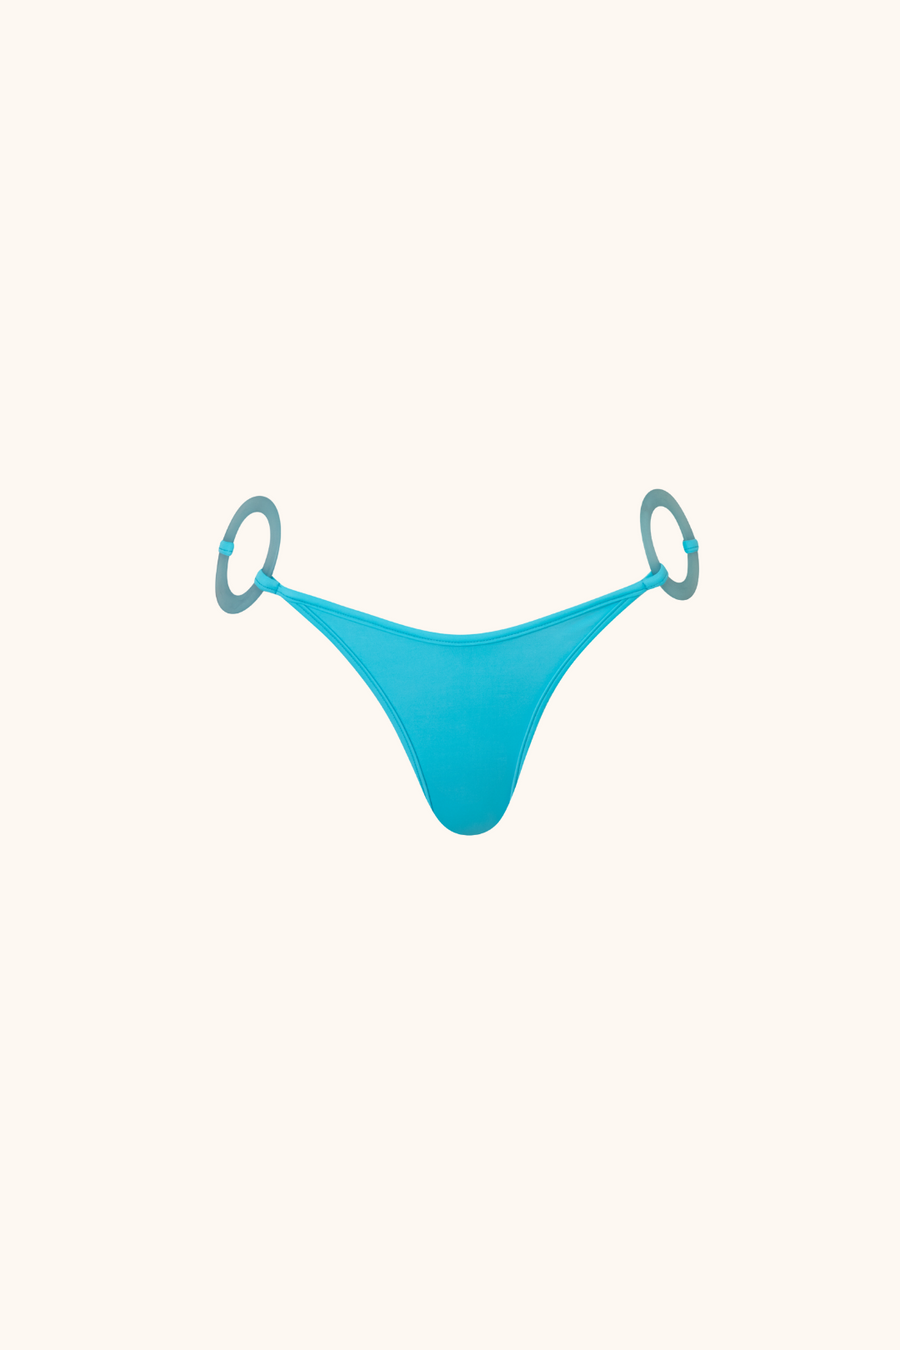 'Sky Blue' Bikini Bottom - PRE ORDER